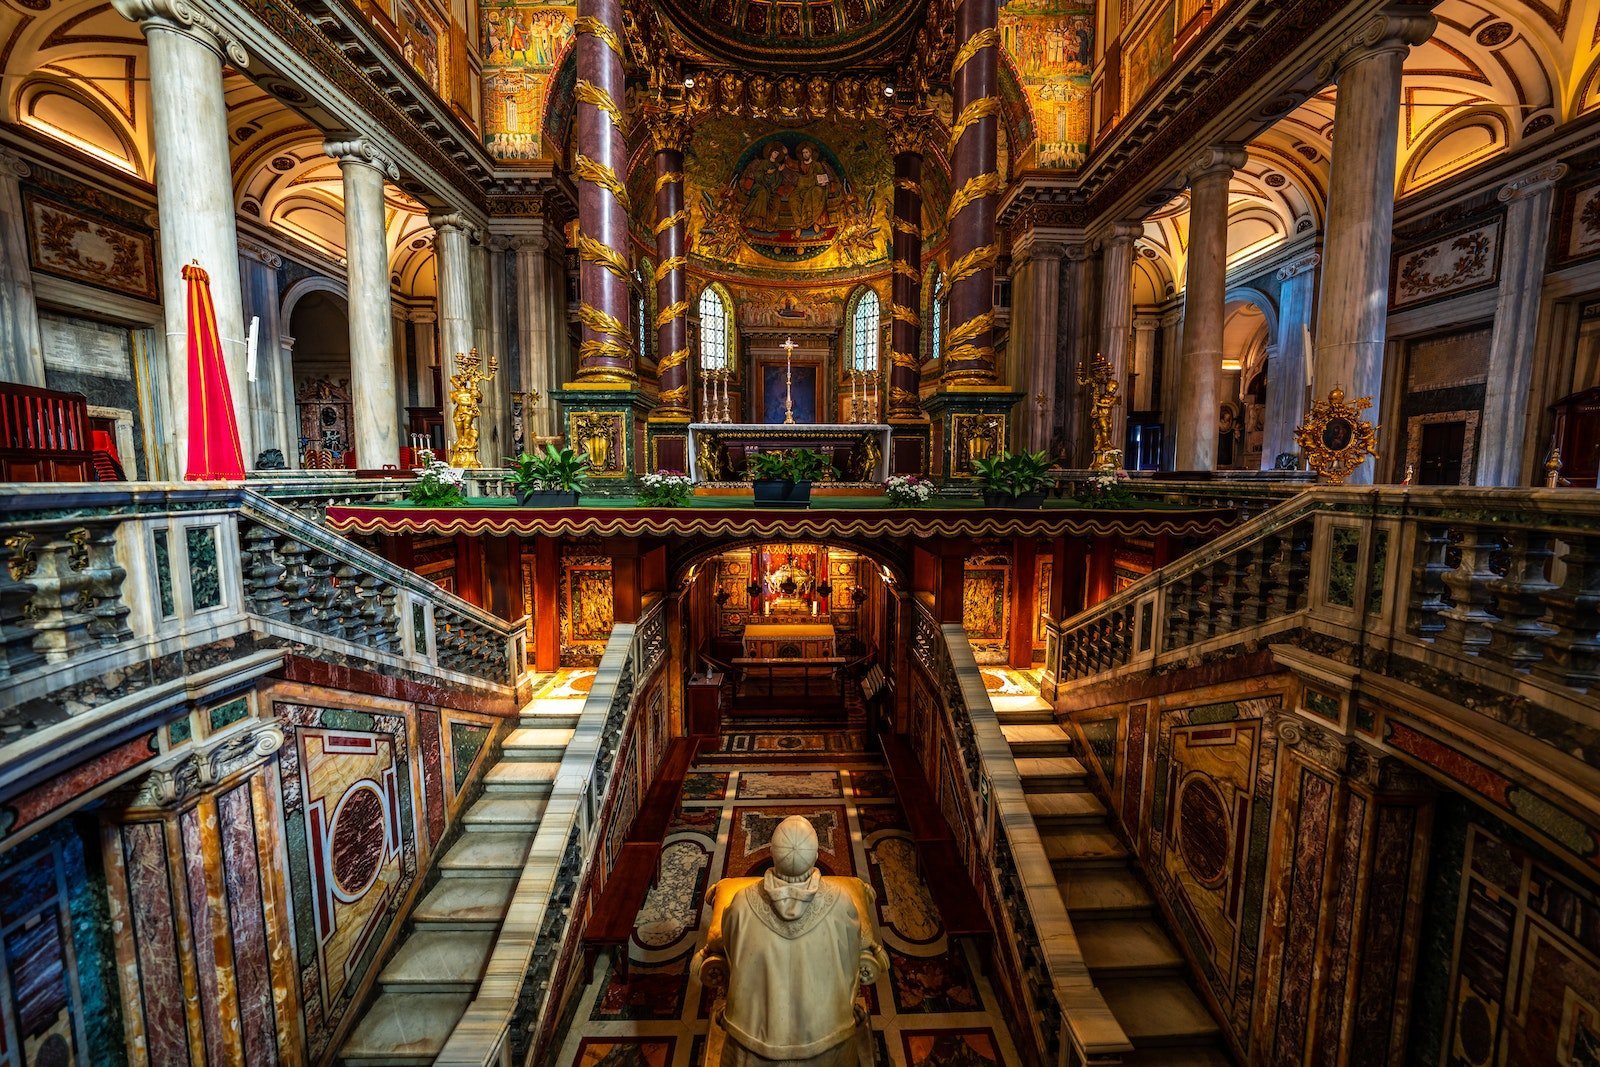 Interior of Baroque Basilica of Saint Mary Major in Rome